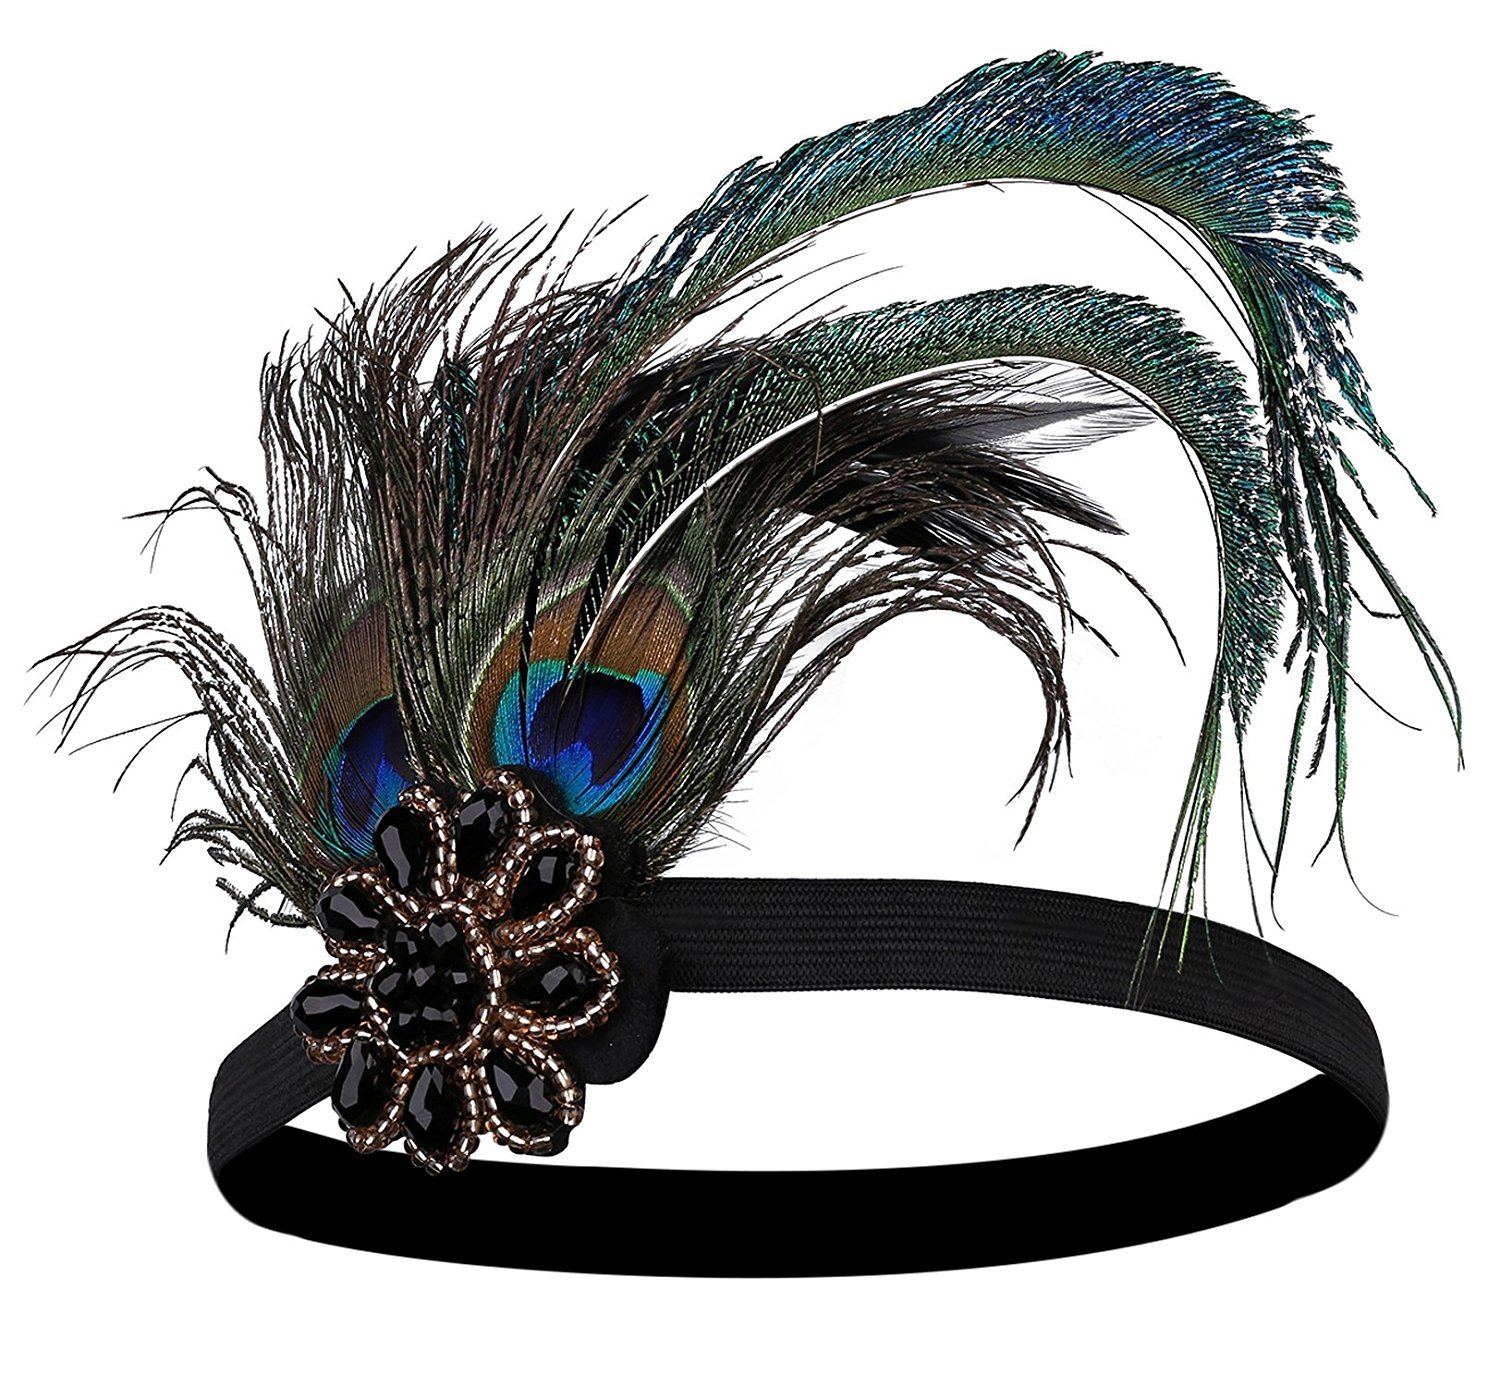 1920s Flapper style Headband Peacock Great Gatsby Headpiece